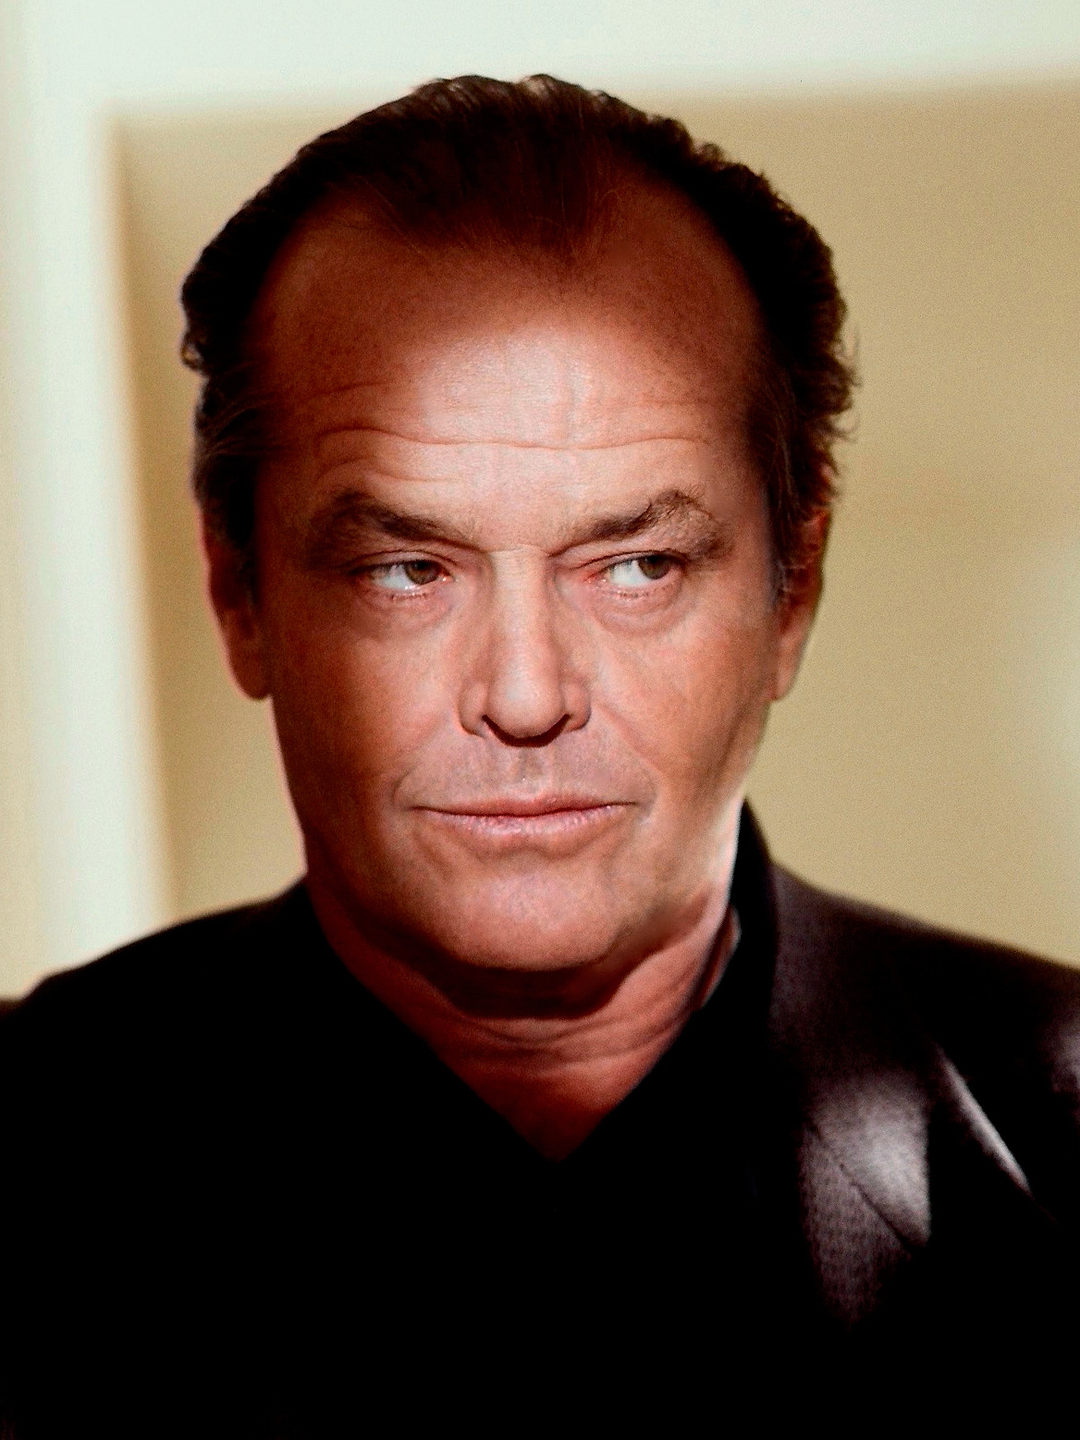 Jack Nicholson ethnicity